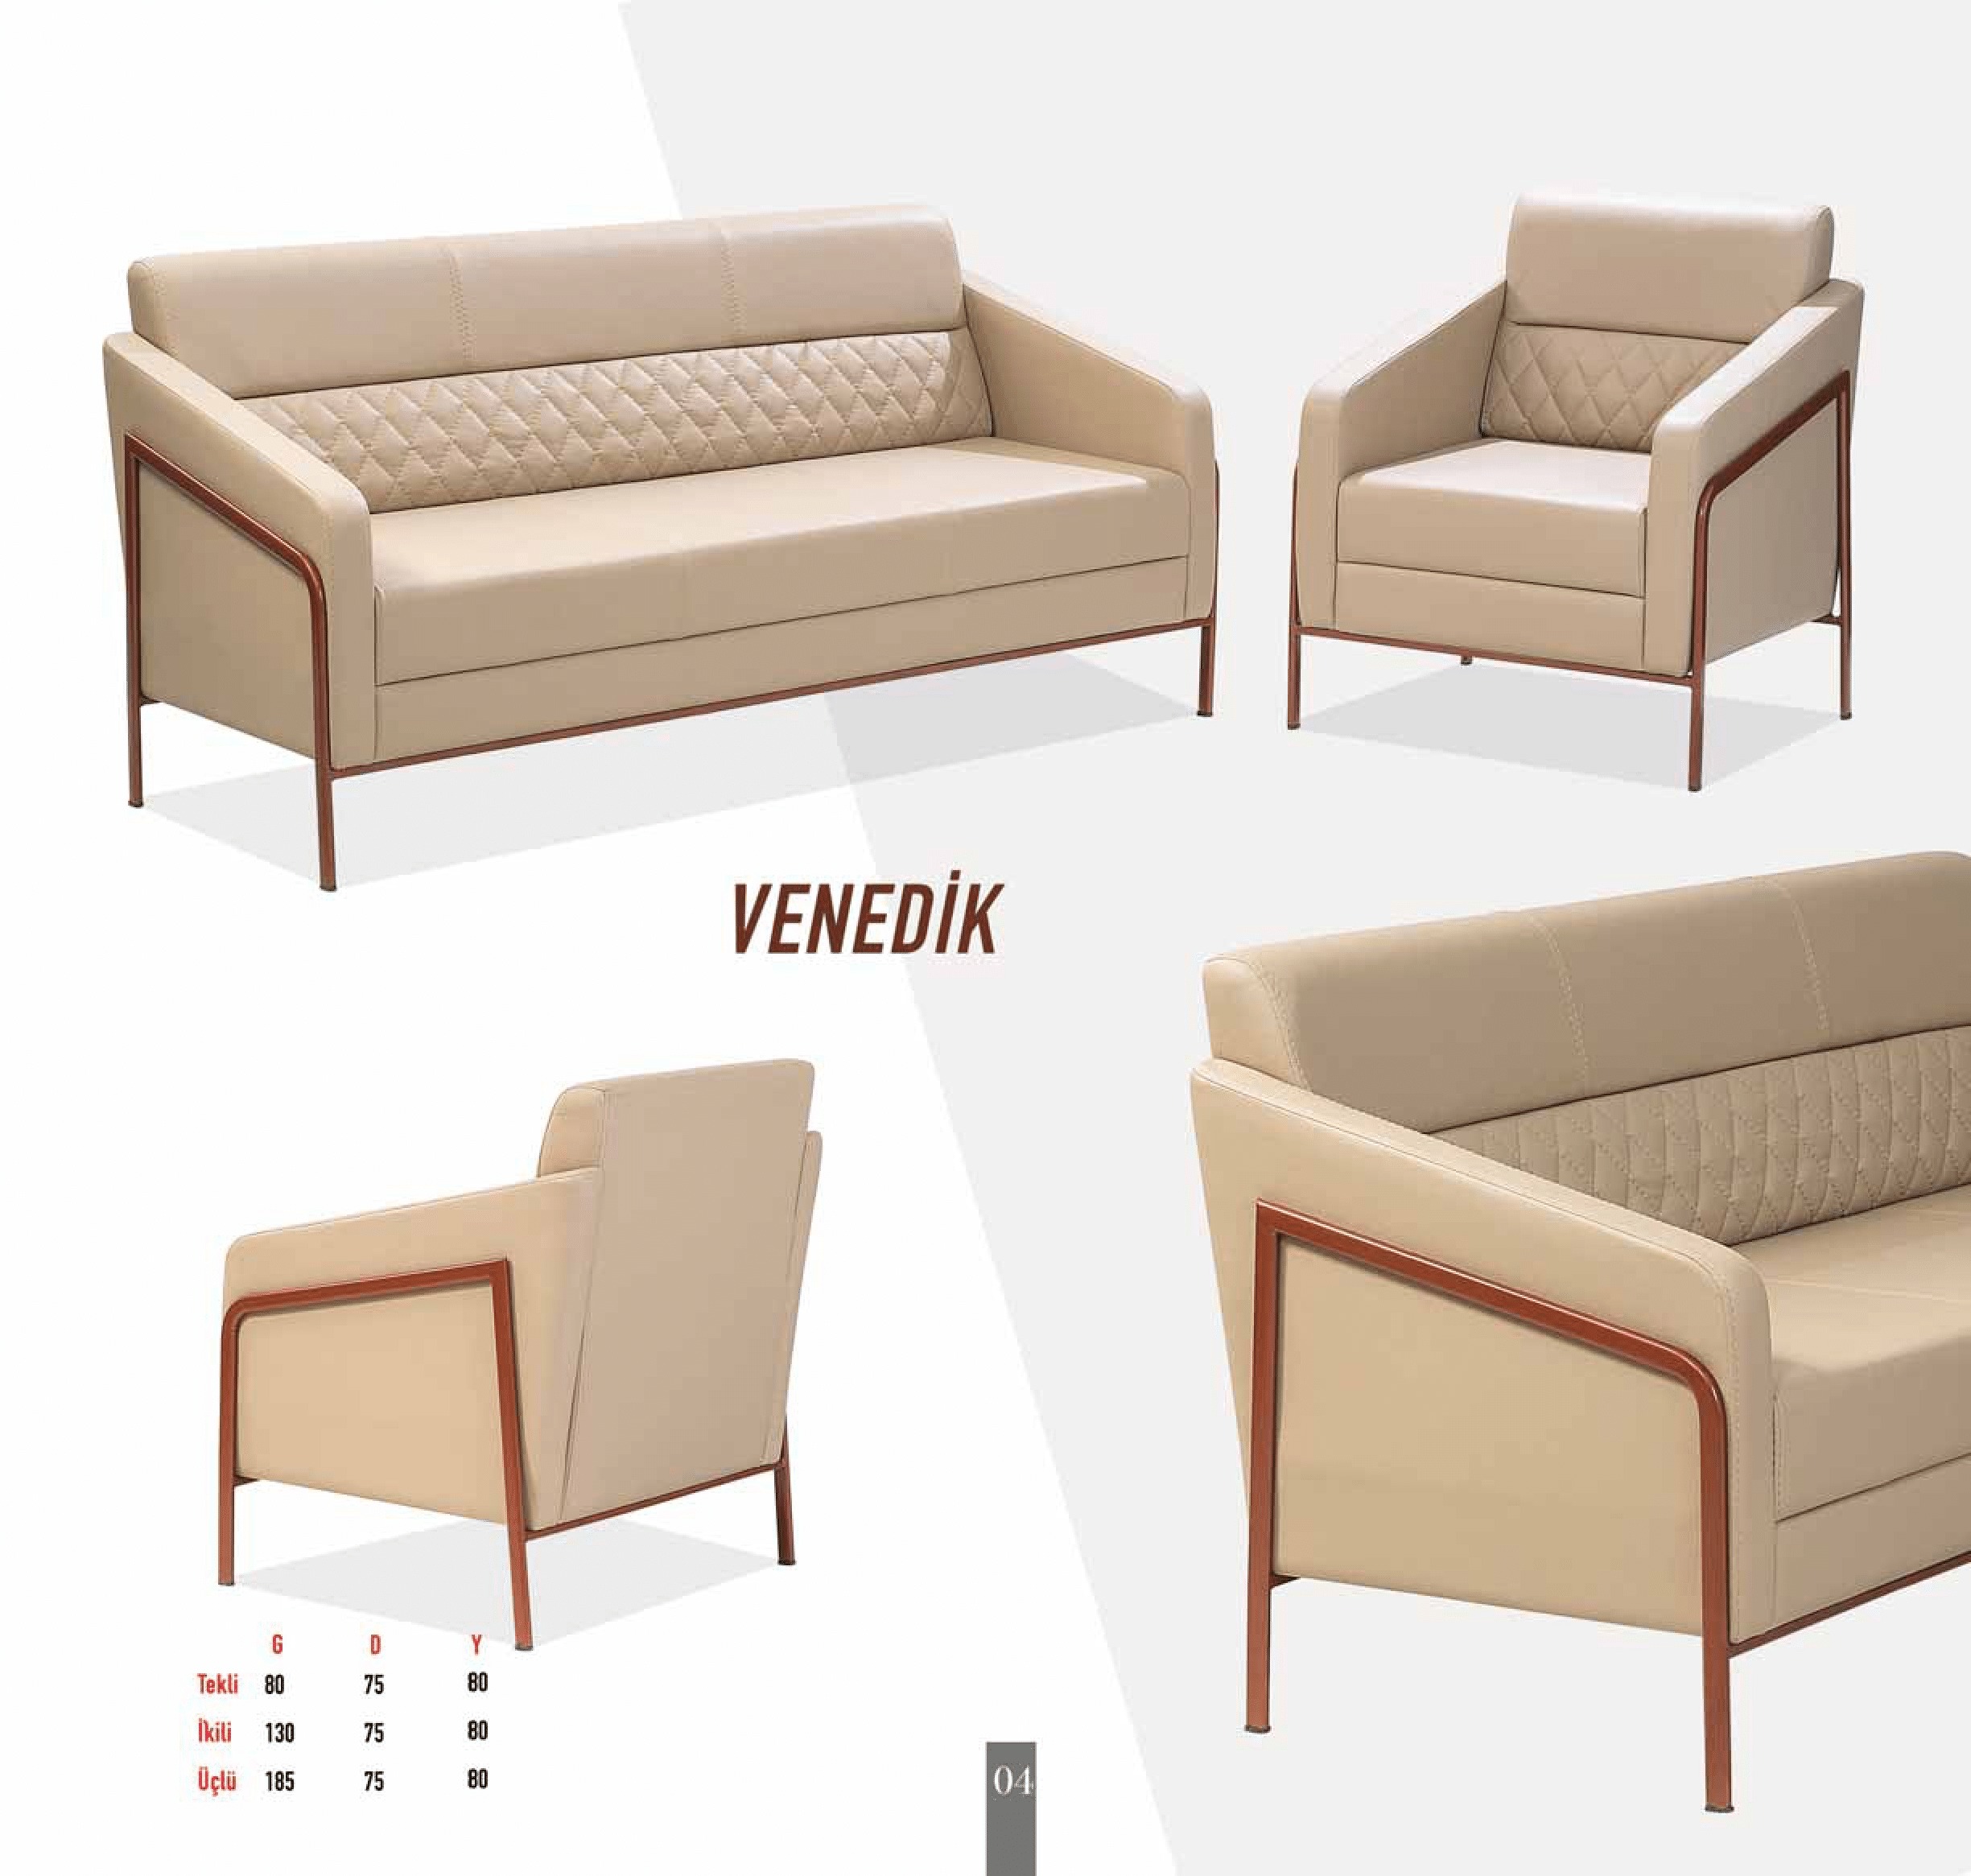 Venedik Office Furniture